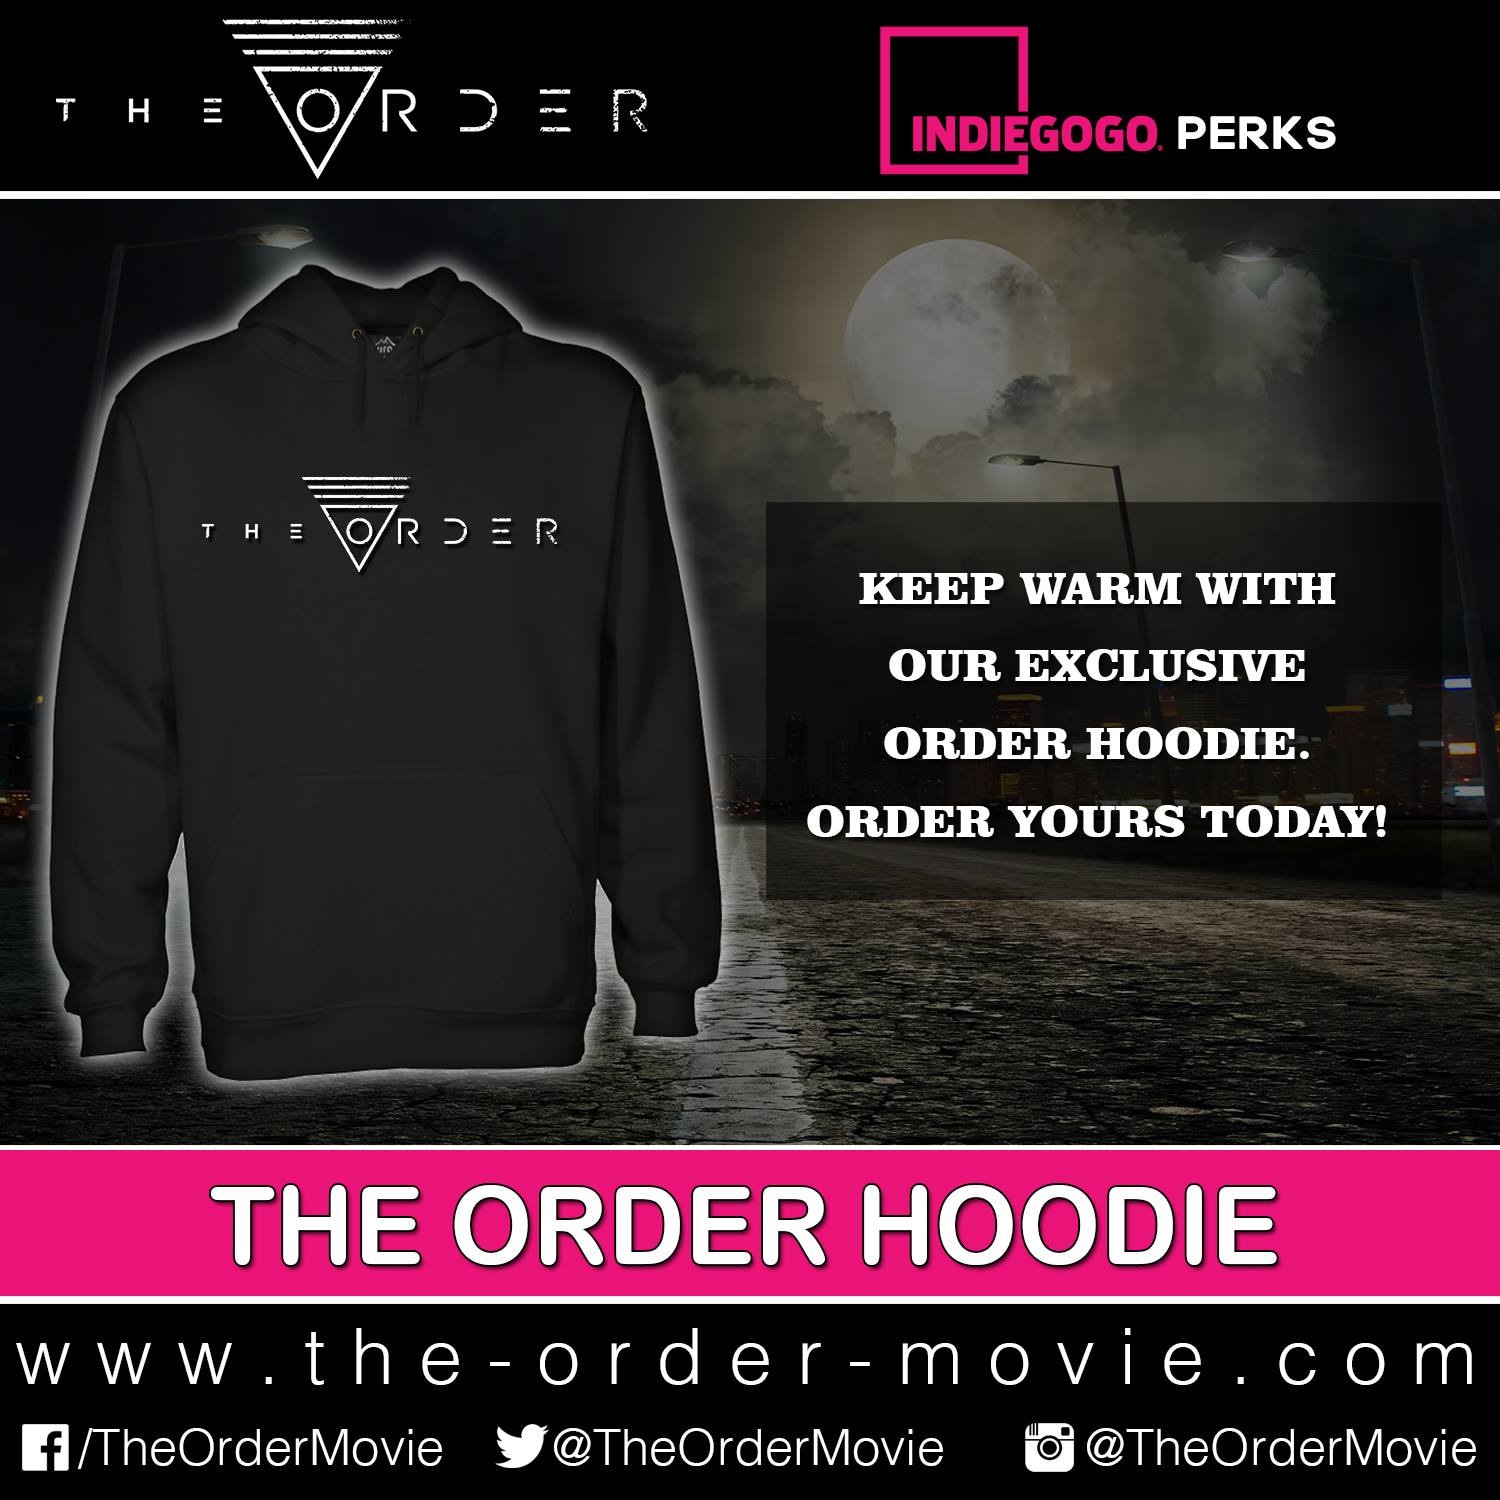 The Order Indiegogo 5.7 2015 94 min 6331 views. the order indiegogo